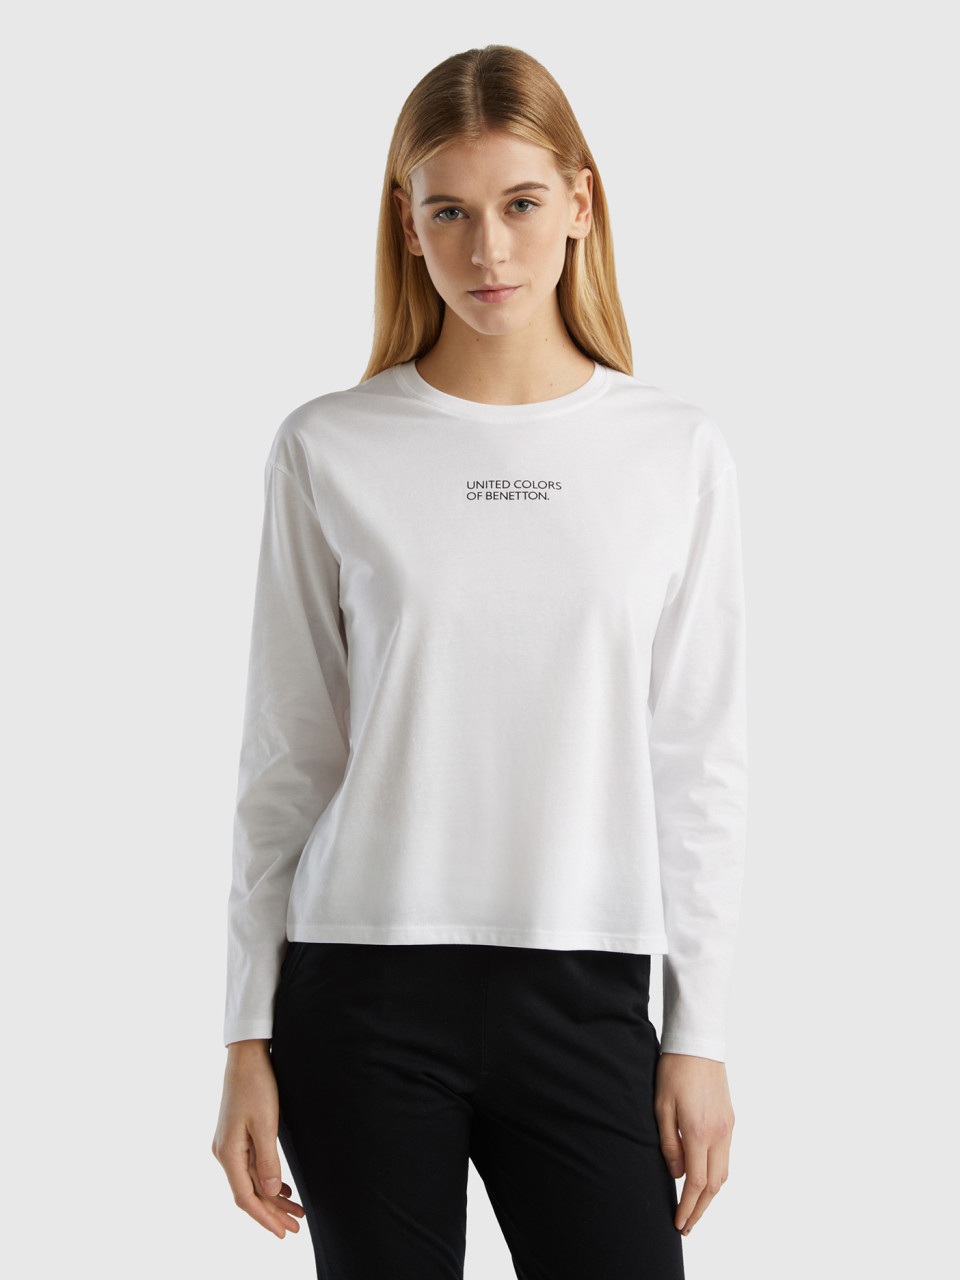 Benetton, T-shirt With Logo Print, White, Women